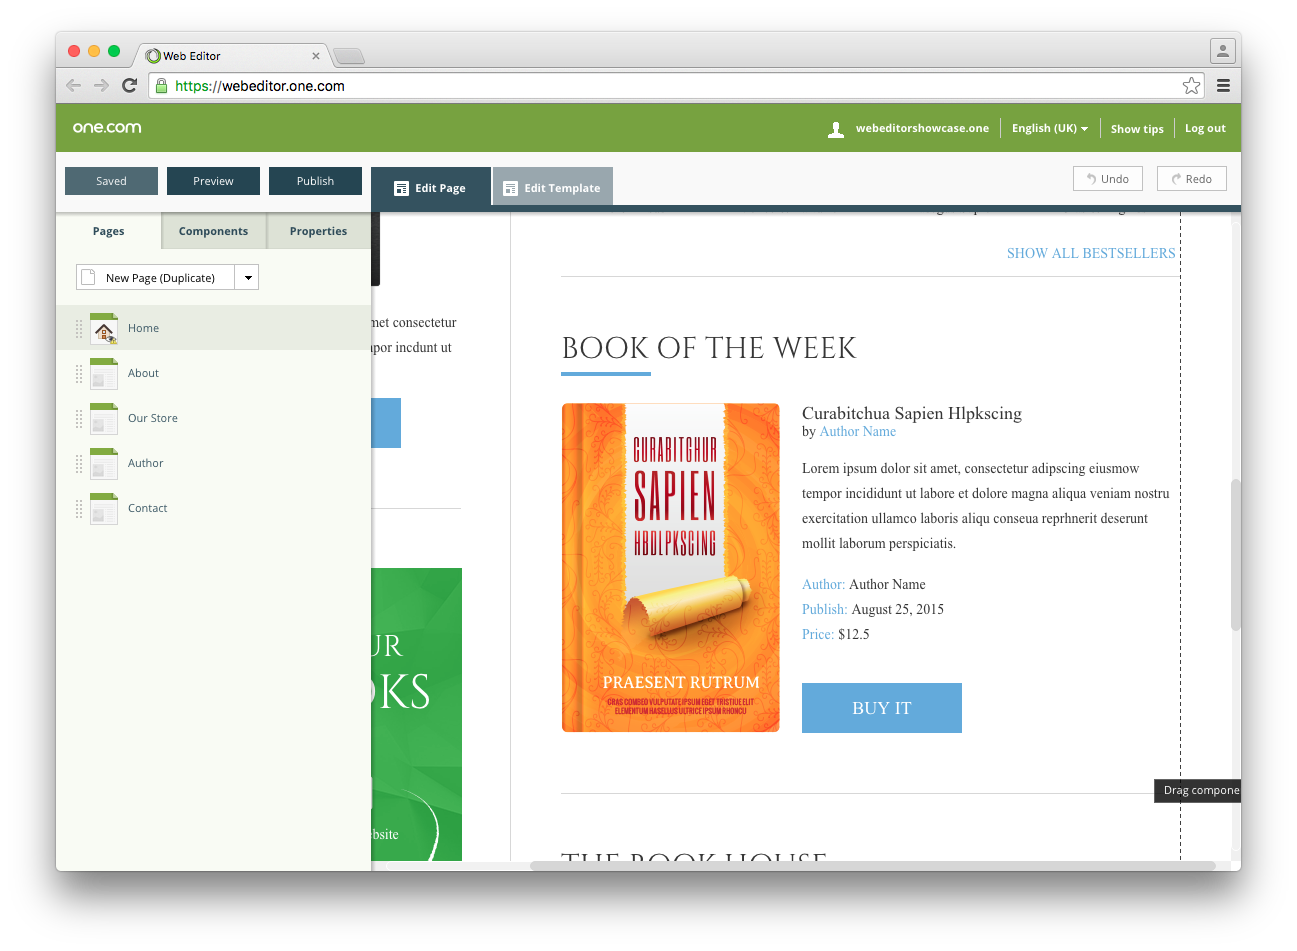 book-of-the-week-inside-webeditor